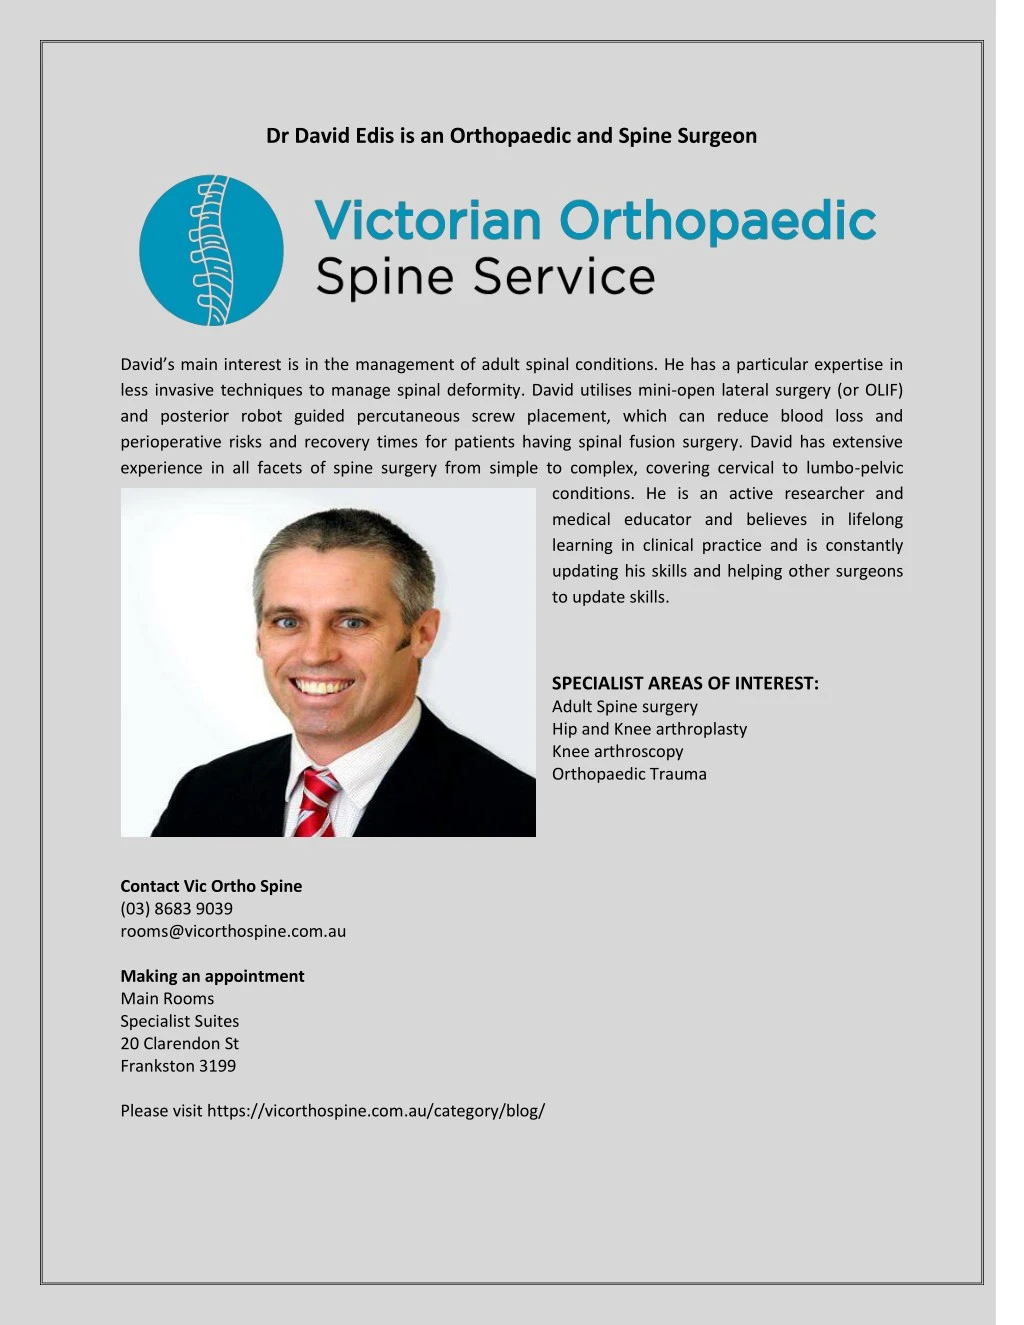 dr david edis is an orthopaedic and spine surgeon